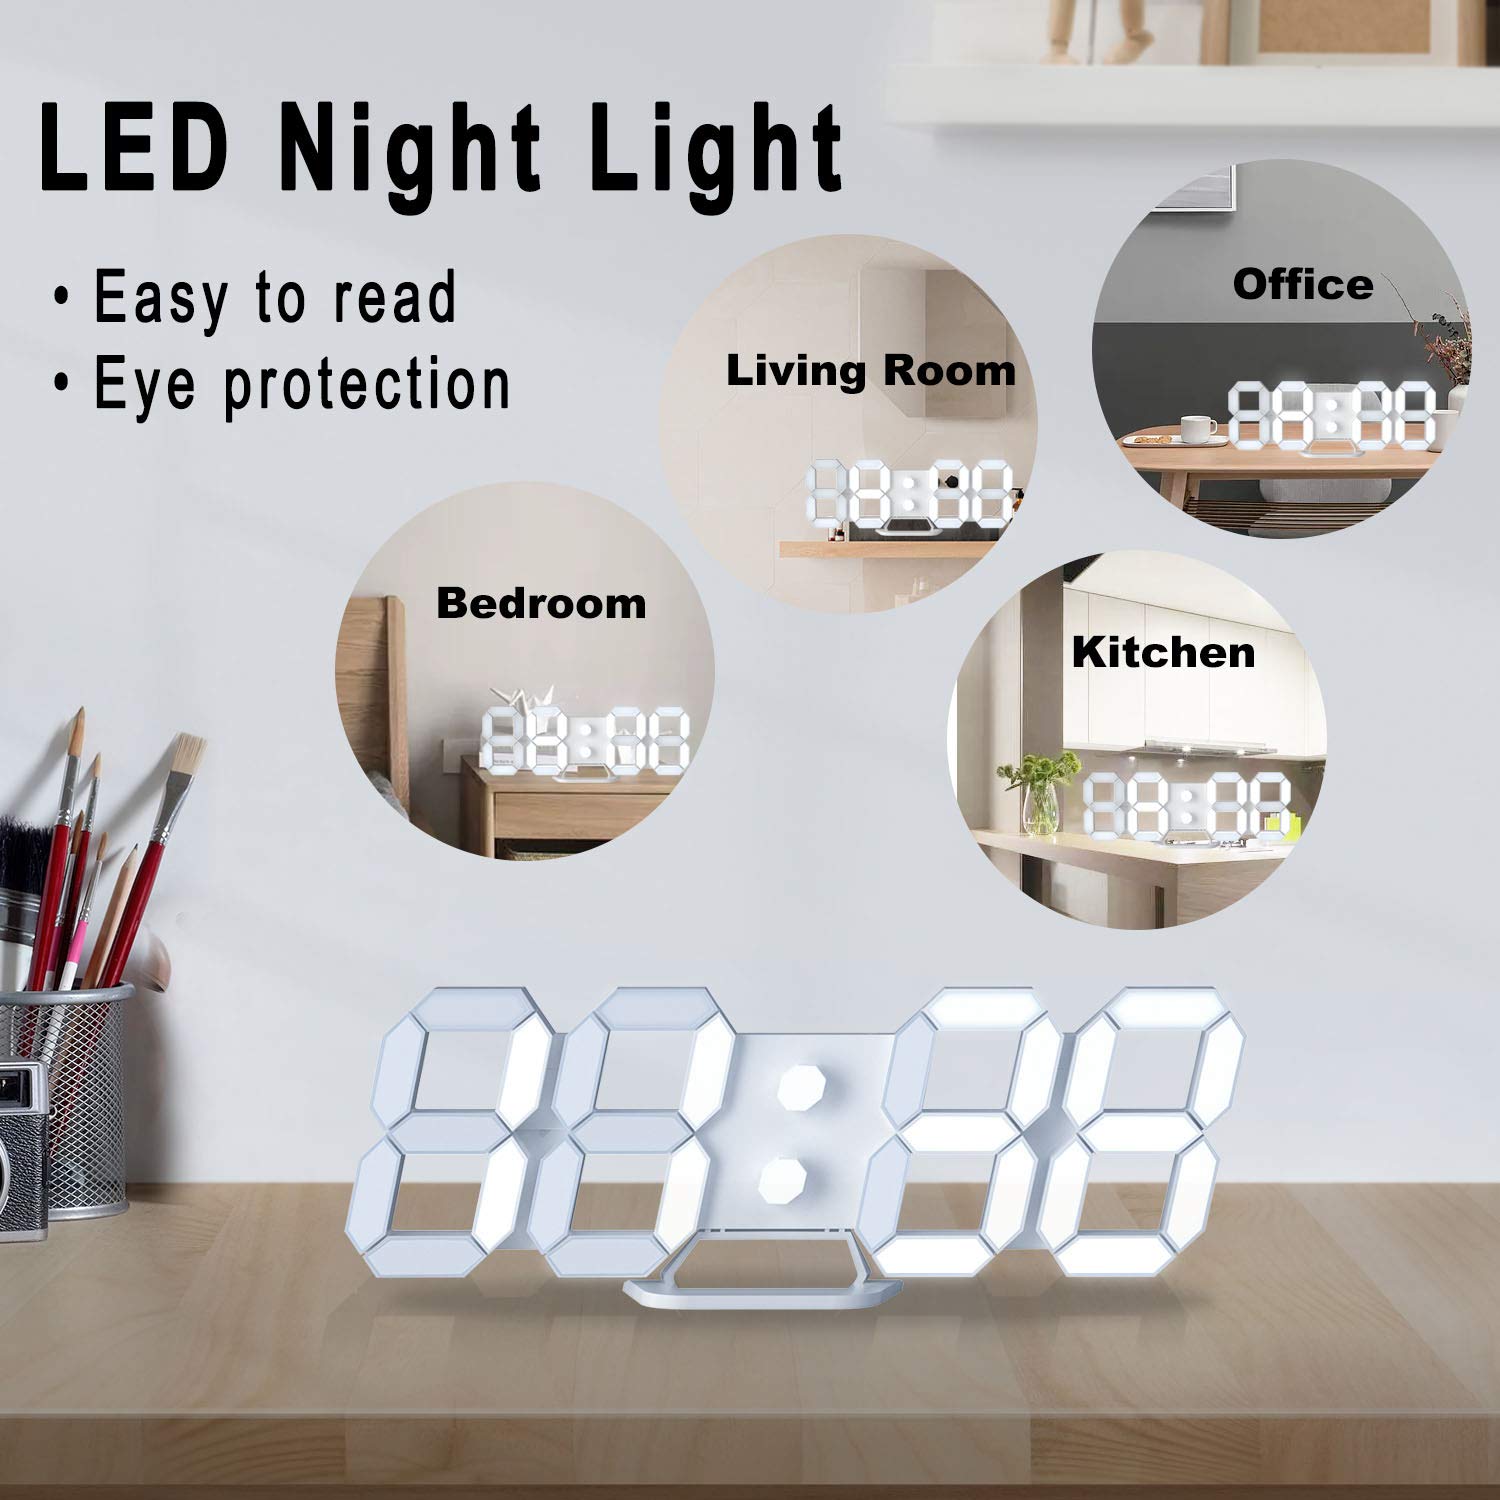 EDUP Home 3D LED Digital Wall Clock Desk Alarm Clock with Remote Control for Kitchen Bedroom Office, Fashion 9.7" LED Night Light Decor Clock Adjust Brightness 12H/24H Time Date Temperature White